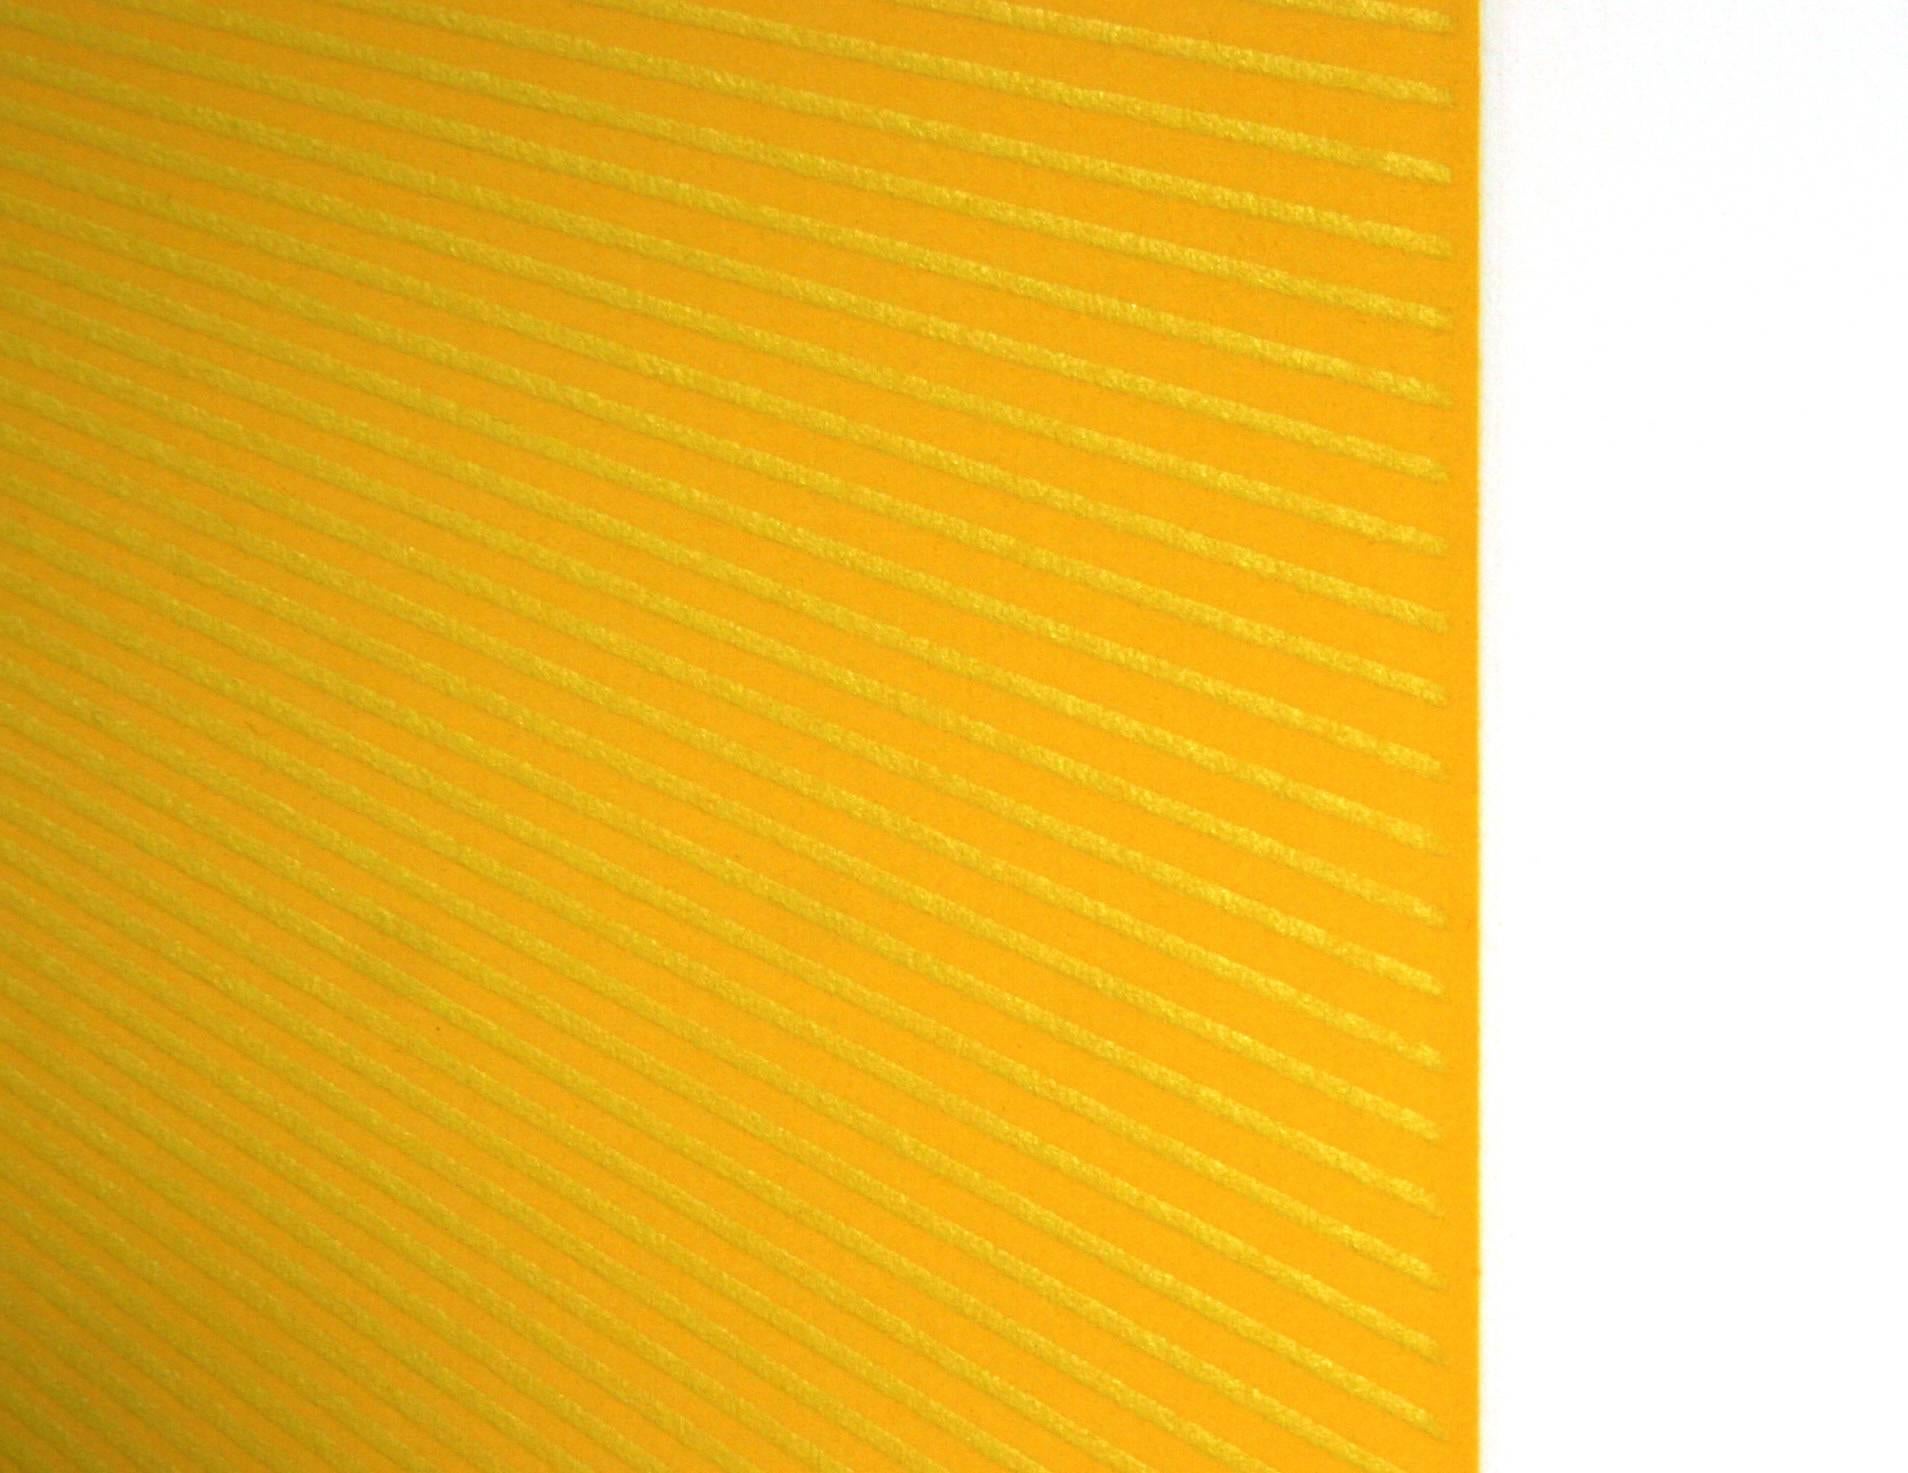 Spring Suite (Yellow with Yellow), OP Art Etching by Anuszkiewicz - Print by Richard Anuszkiewicz